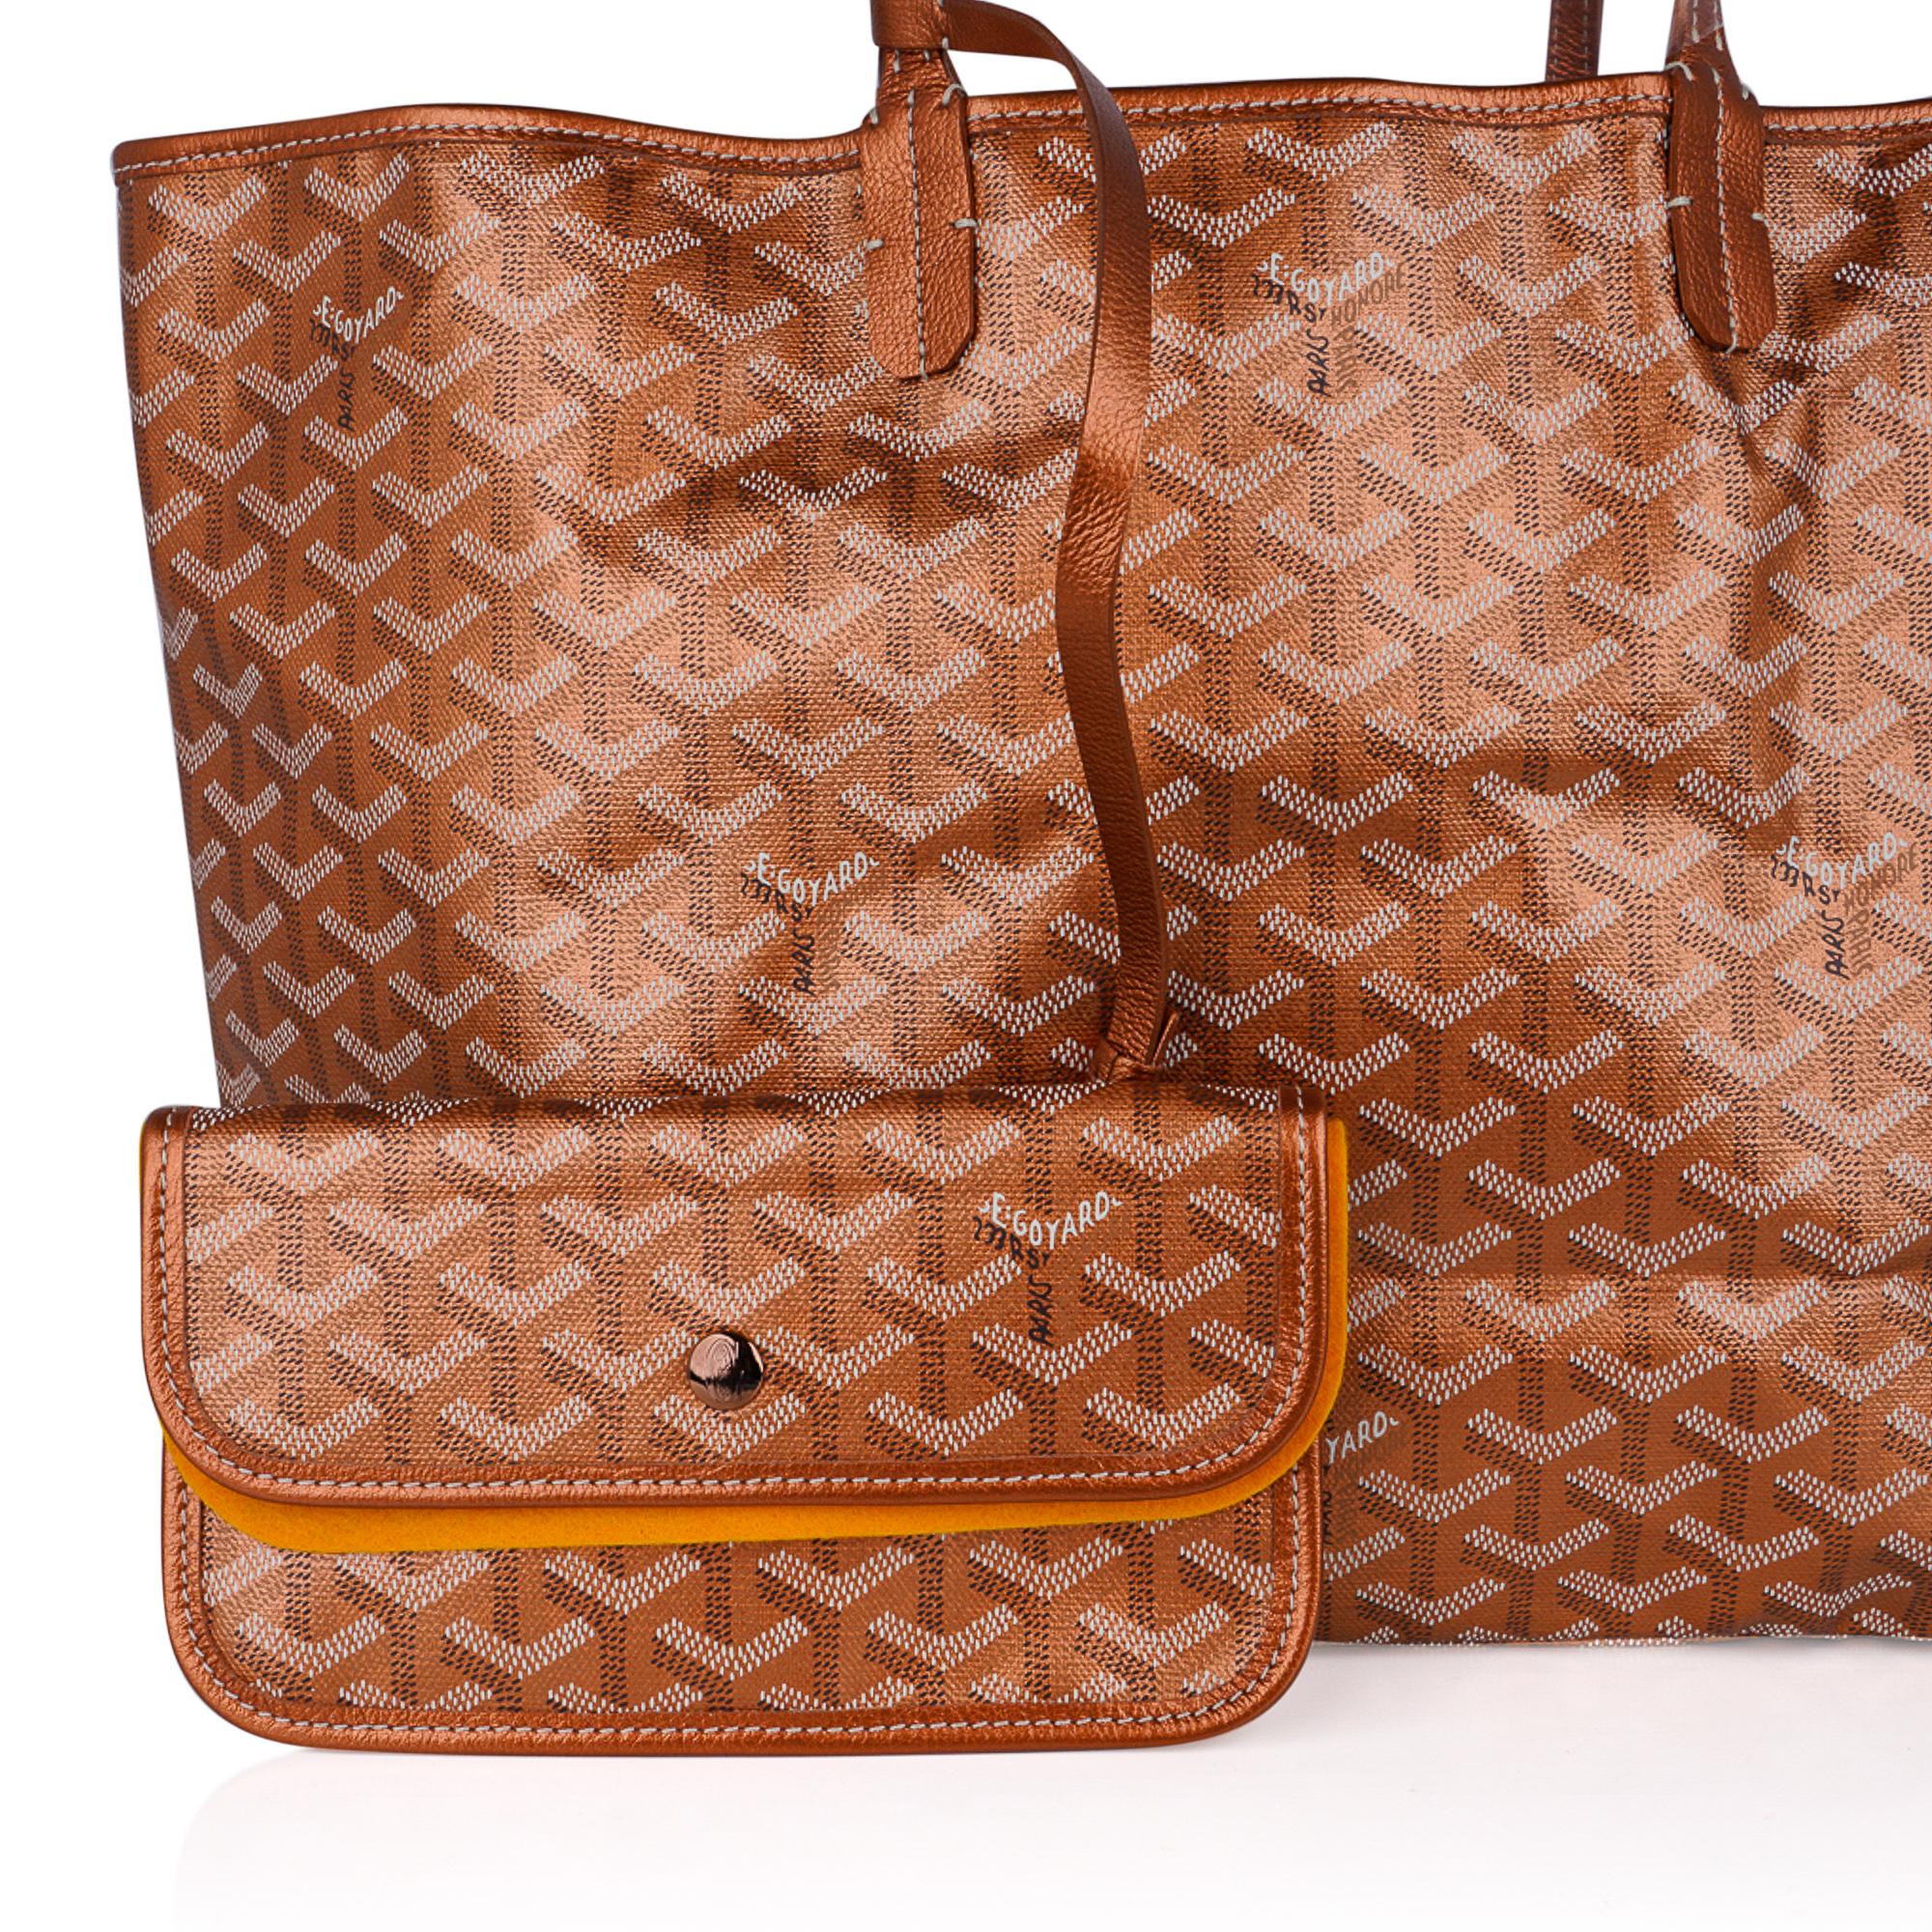 Women's Goyard Saint Louis Metallic Bronze PM Tote Bag Limited Edition 2021 New w/Tag